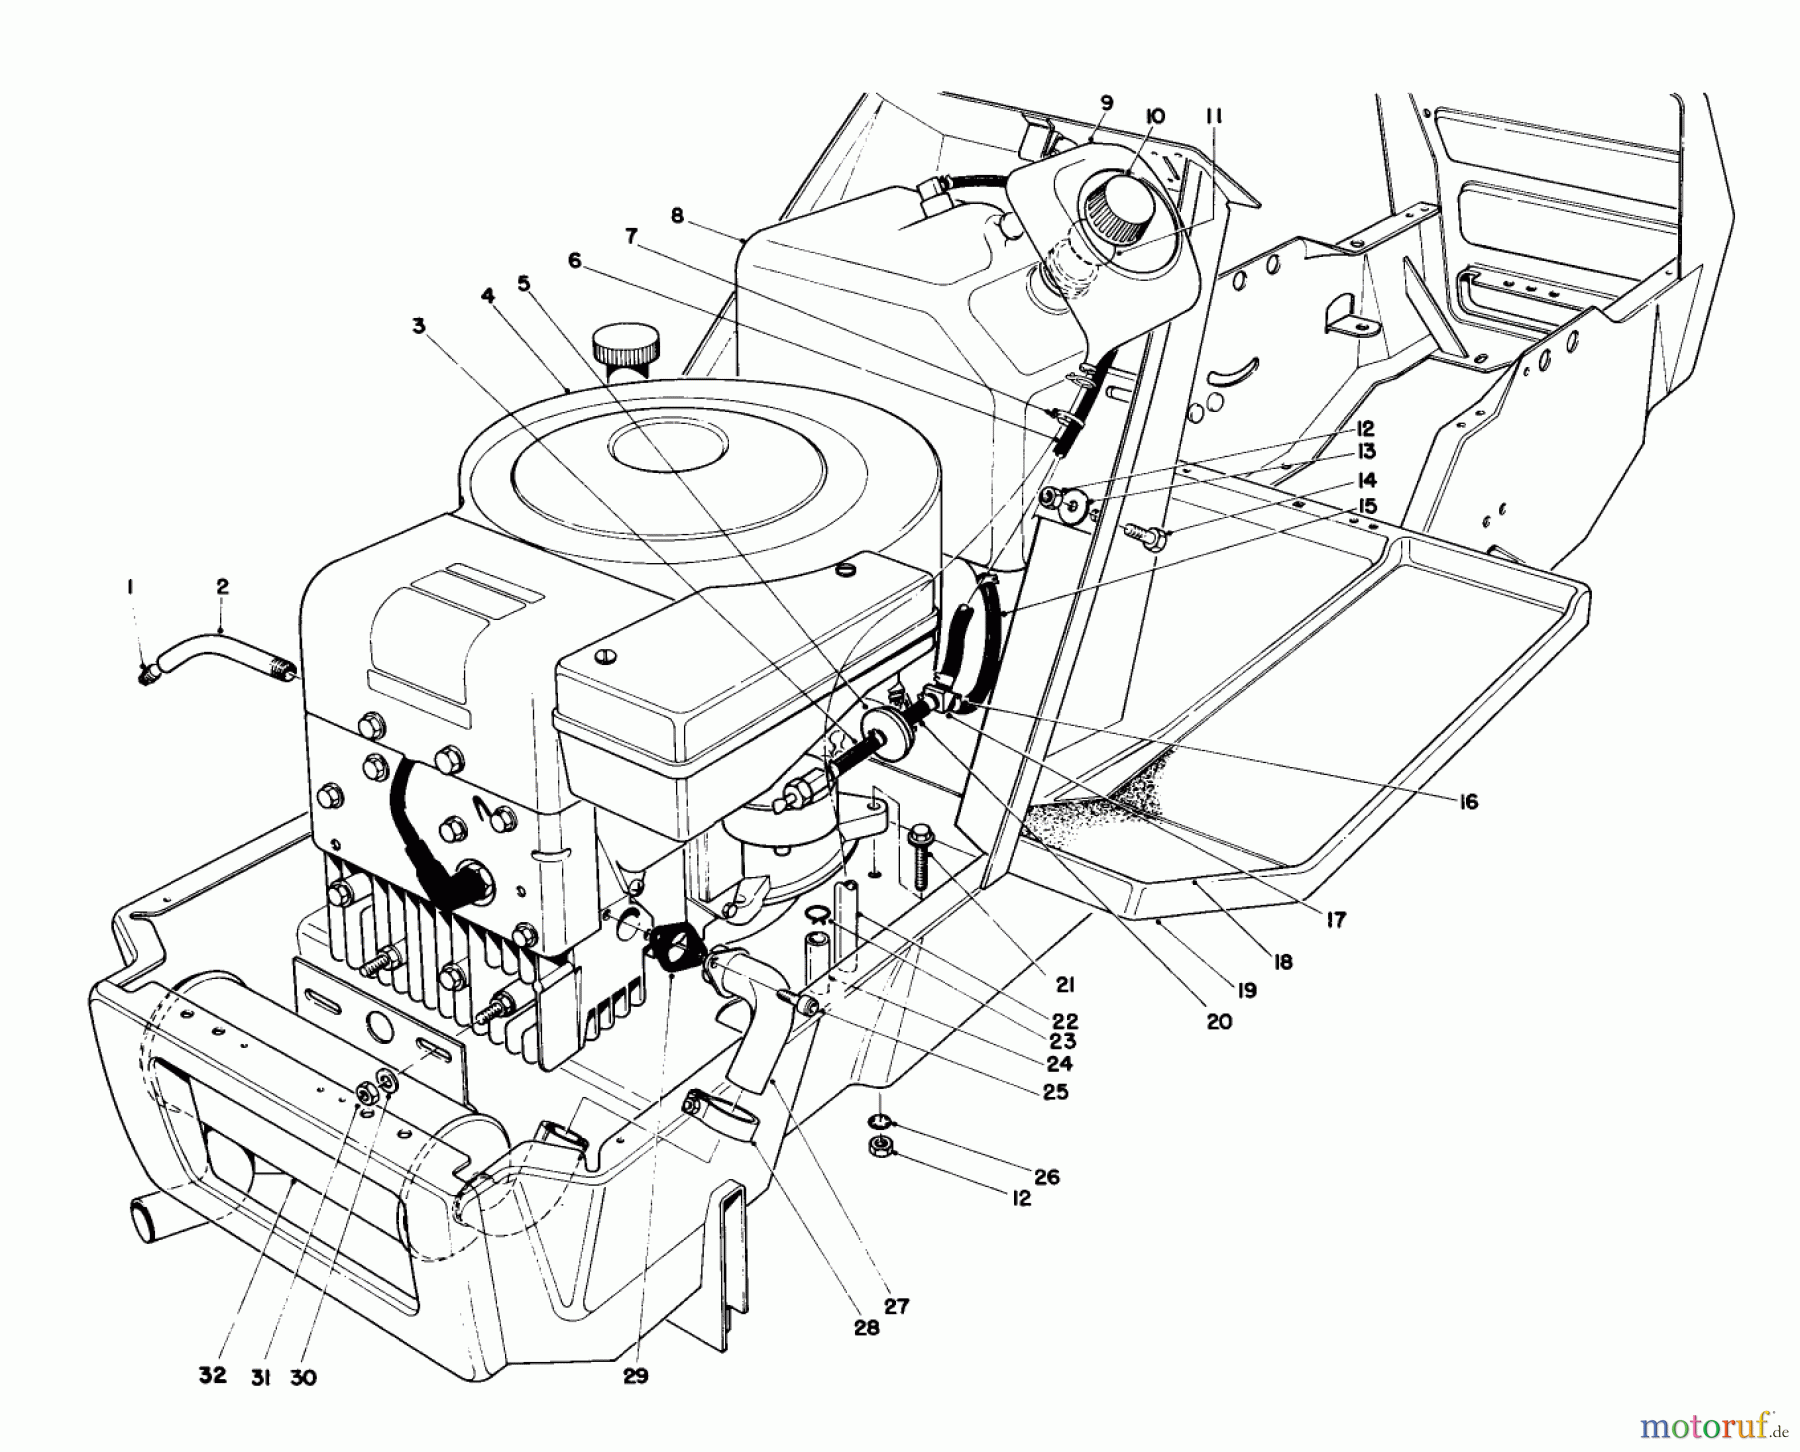  Toro Neu Mowers, Lawn & Garden Tractor Seite 1 57300 (8-32) - Toro 8-32 Front Engine Rider, 1985 (5000001-5999999) ENGINE ASSEMBLY MODEL 57360